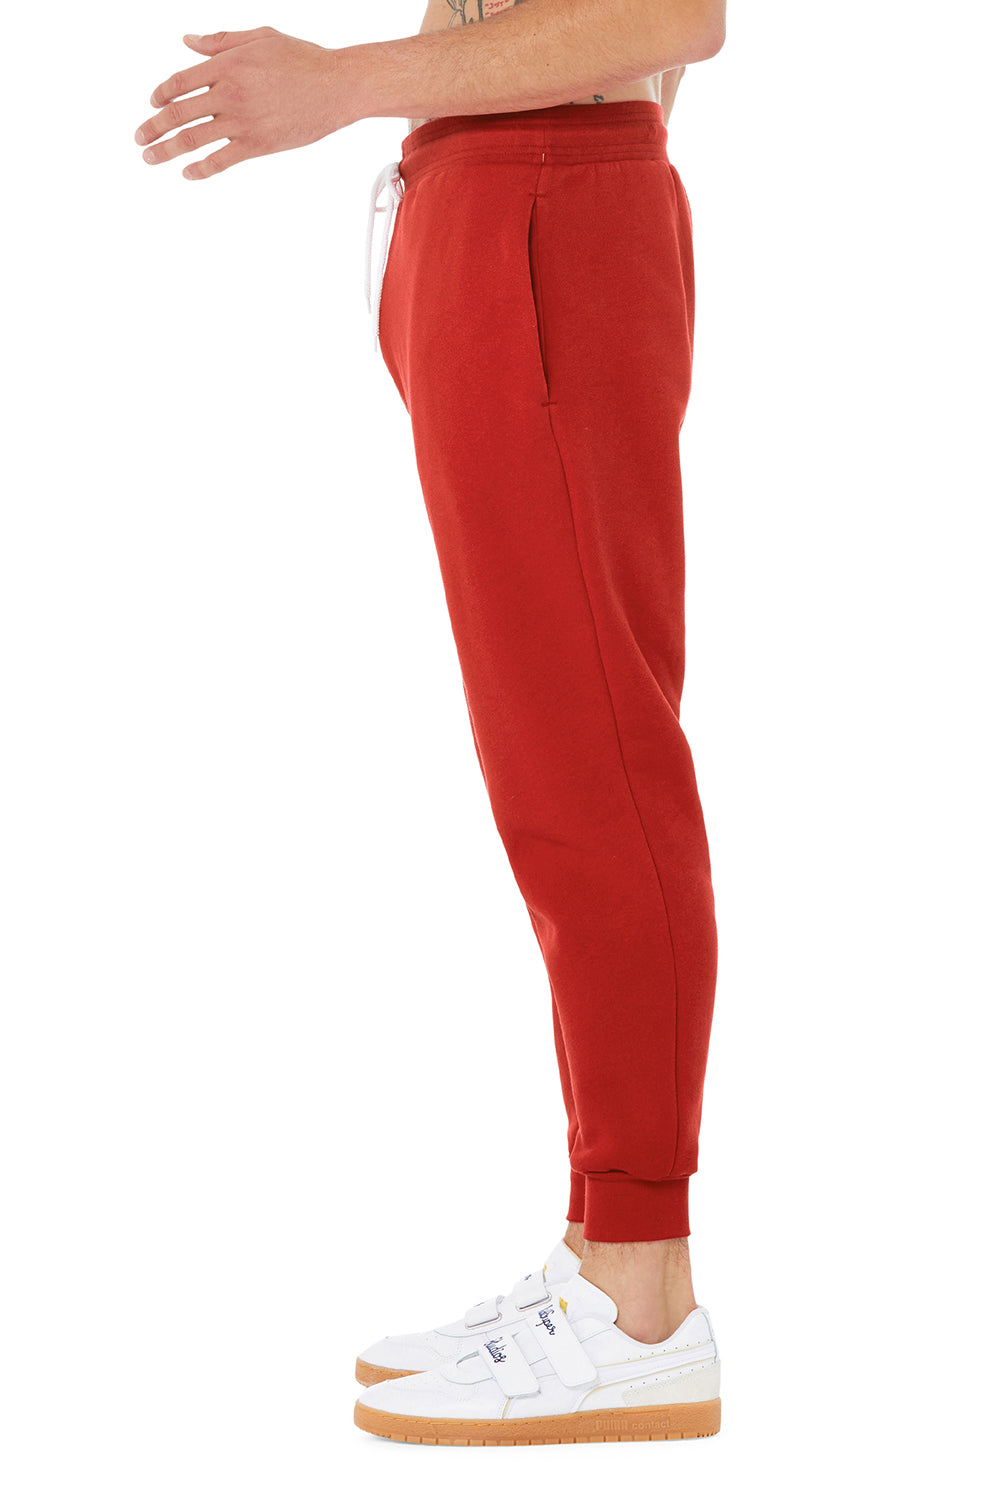 Bella + Canvas BC3727 Mens Jogger Sweatpants w/ Pockets Red Model Side